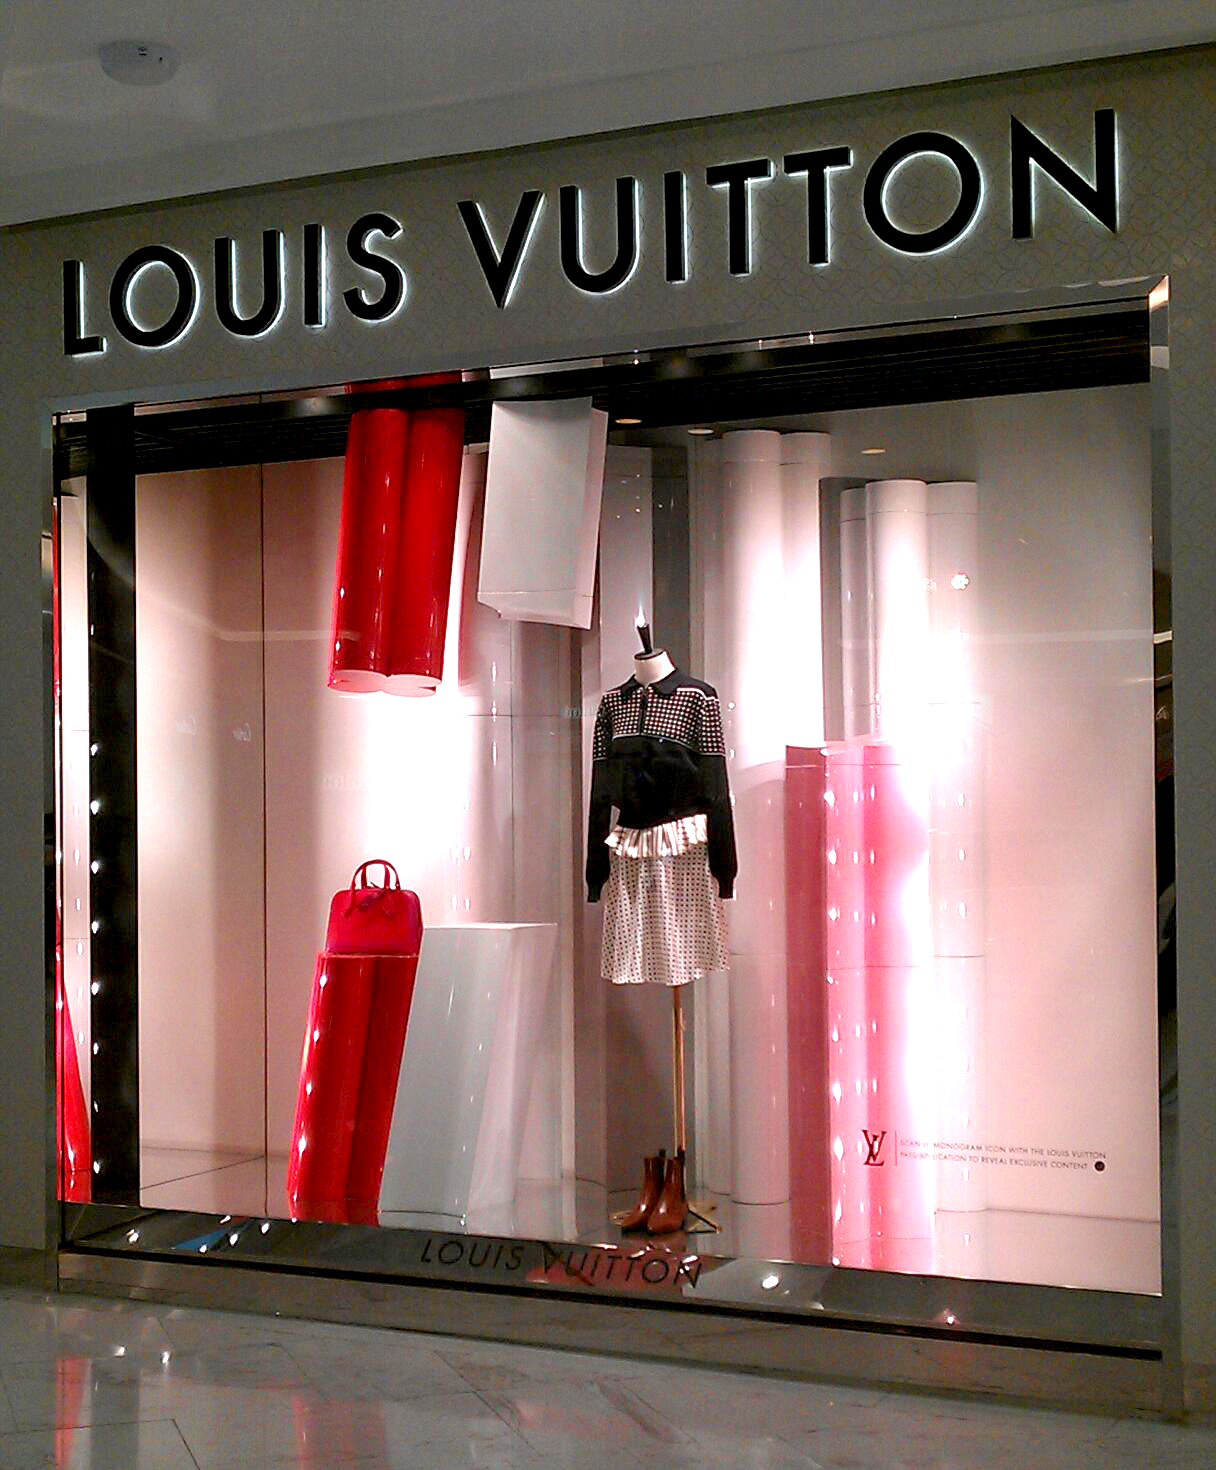 LOUIS VUITTON windows in Bangkok